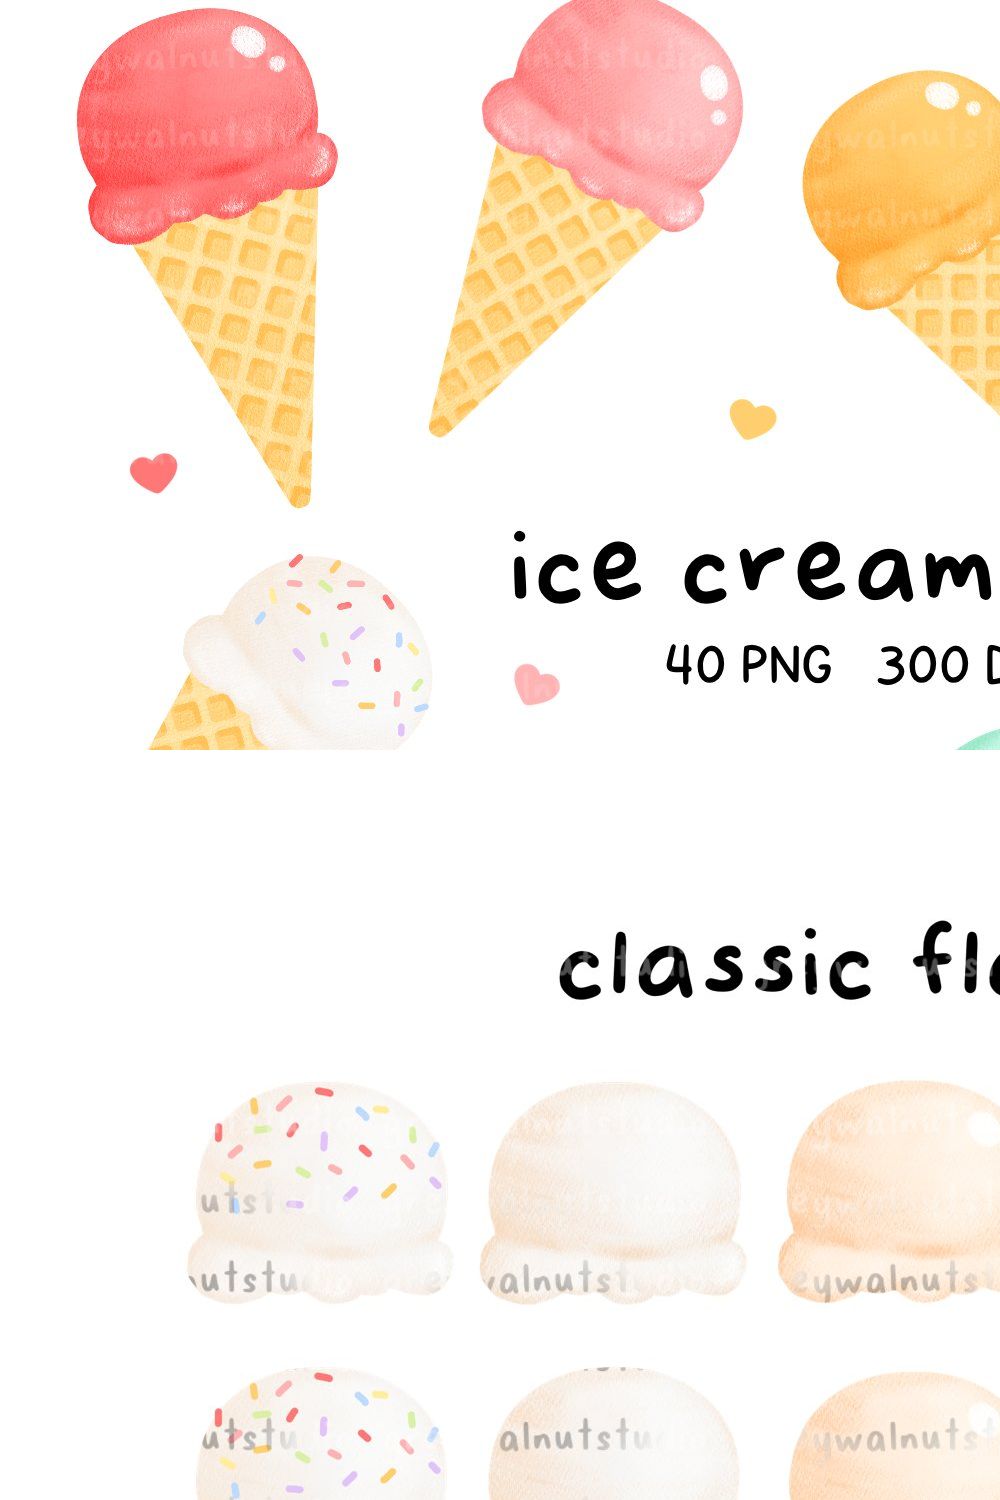 Ice Cream Cones Clipart pinterest preview image.